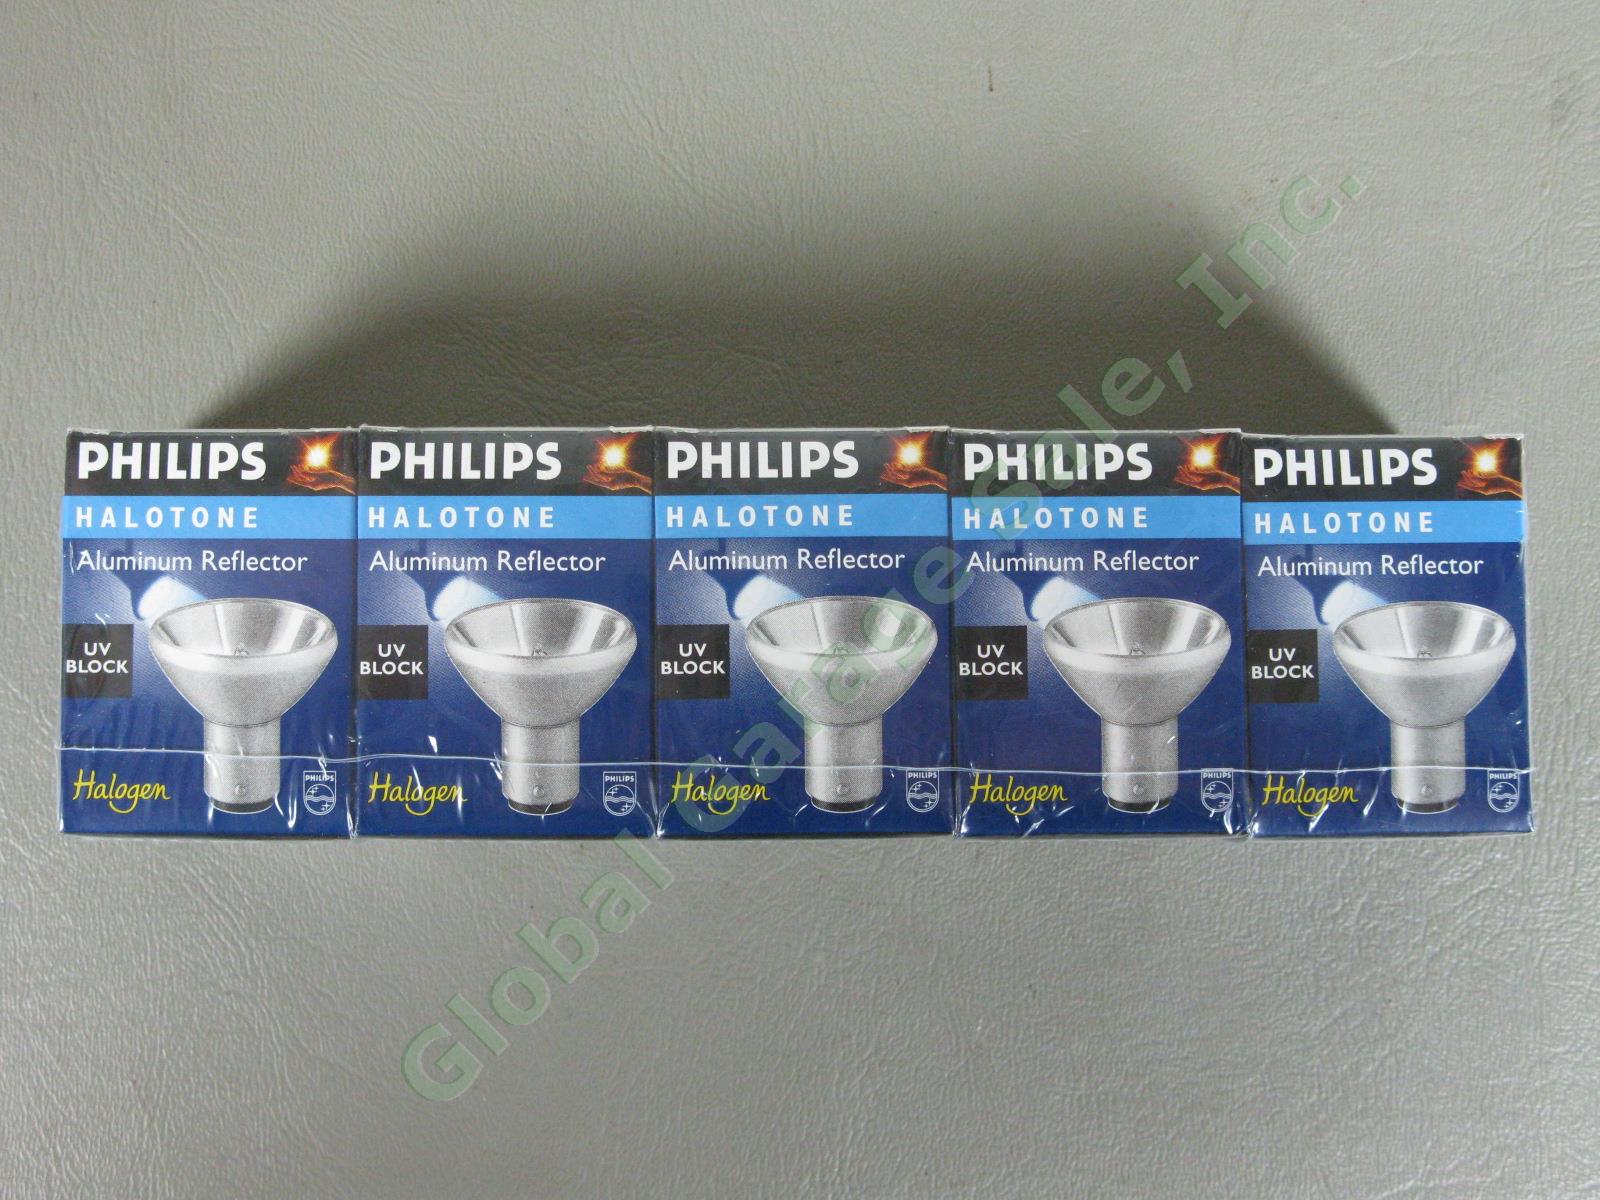 50 NEW Philips Halotone Light Bulb Lot 20w 12v UV Block 6434/FR Frosted 18° Set 1